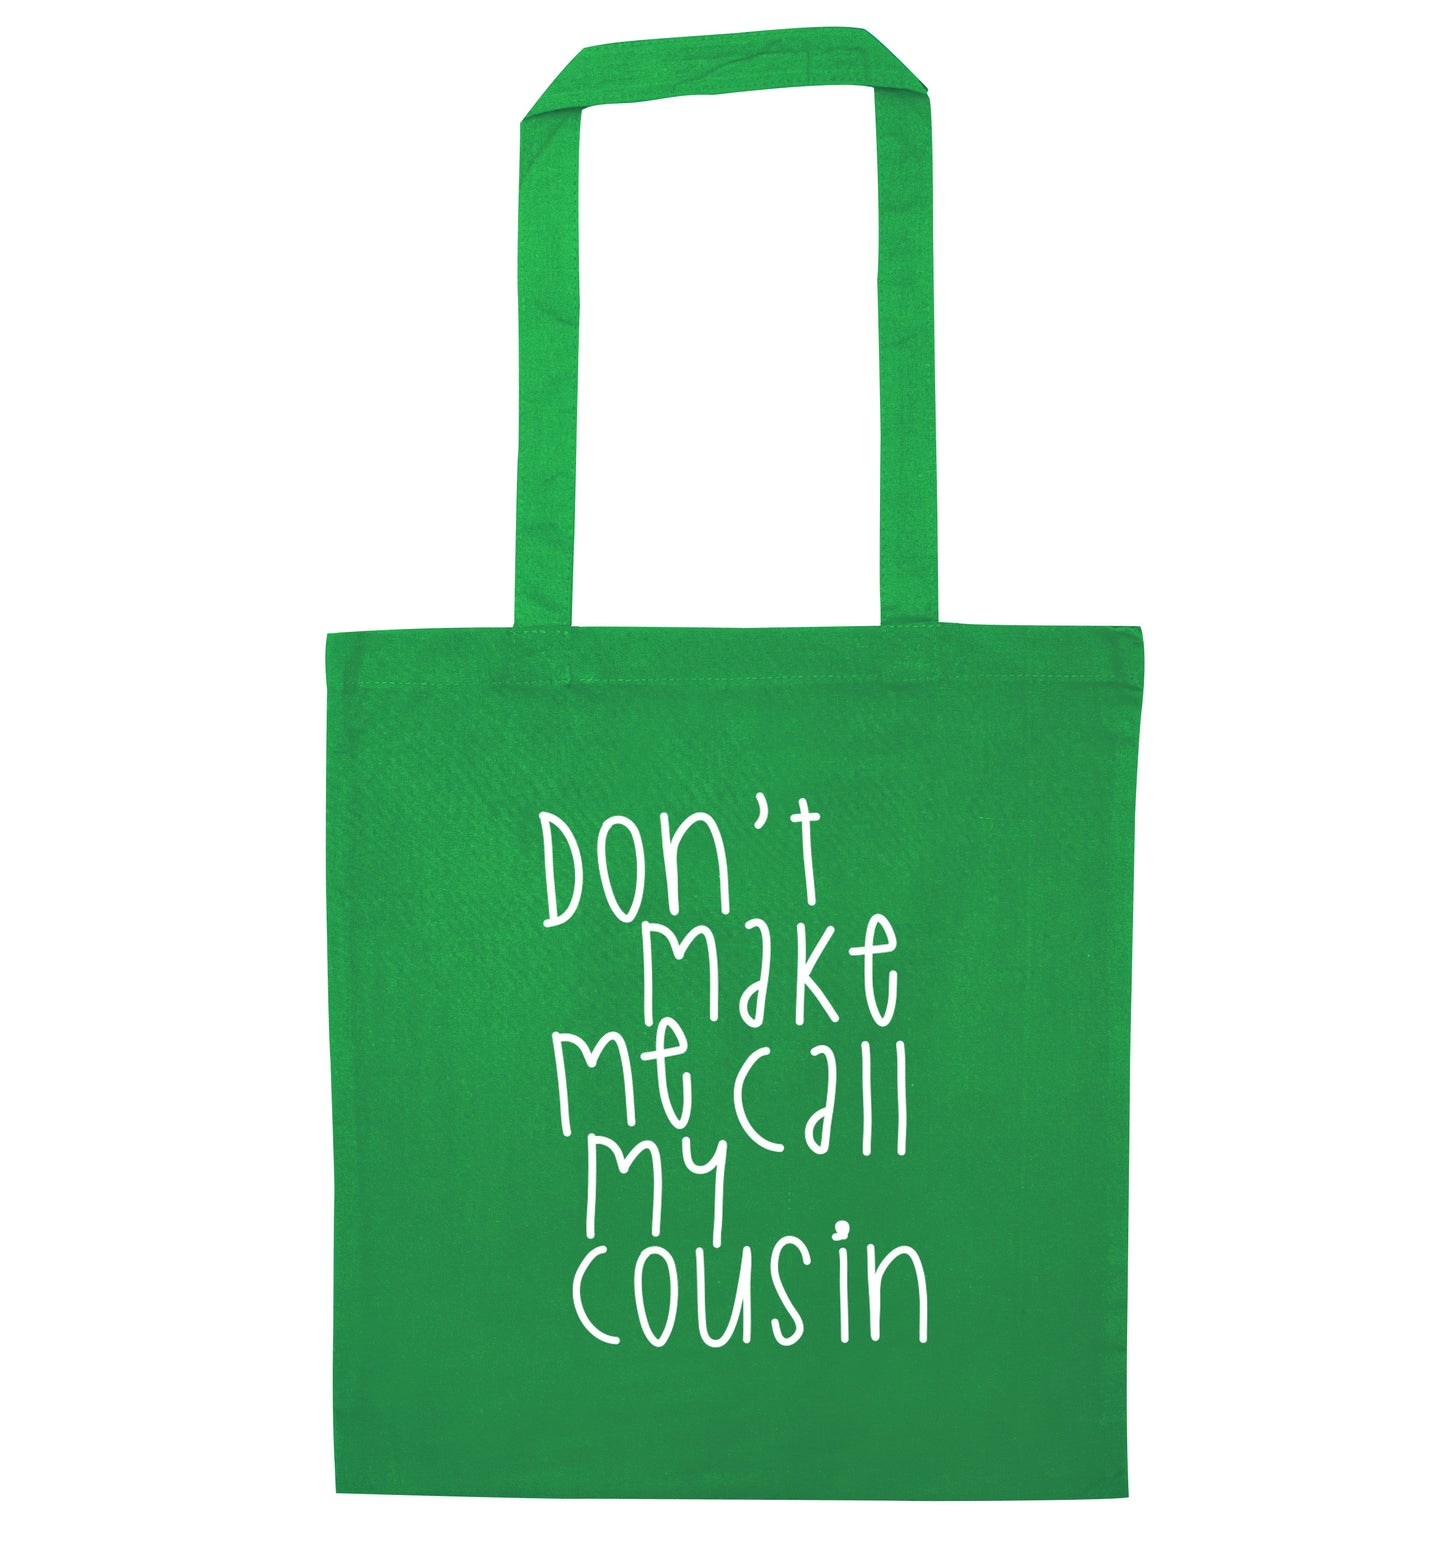 Don't make me call my cousin green tote bag